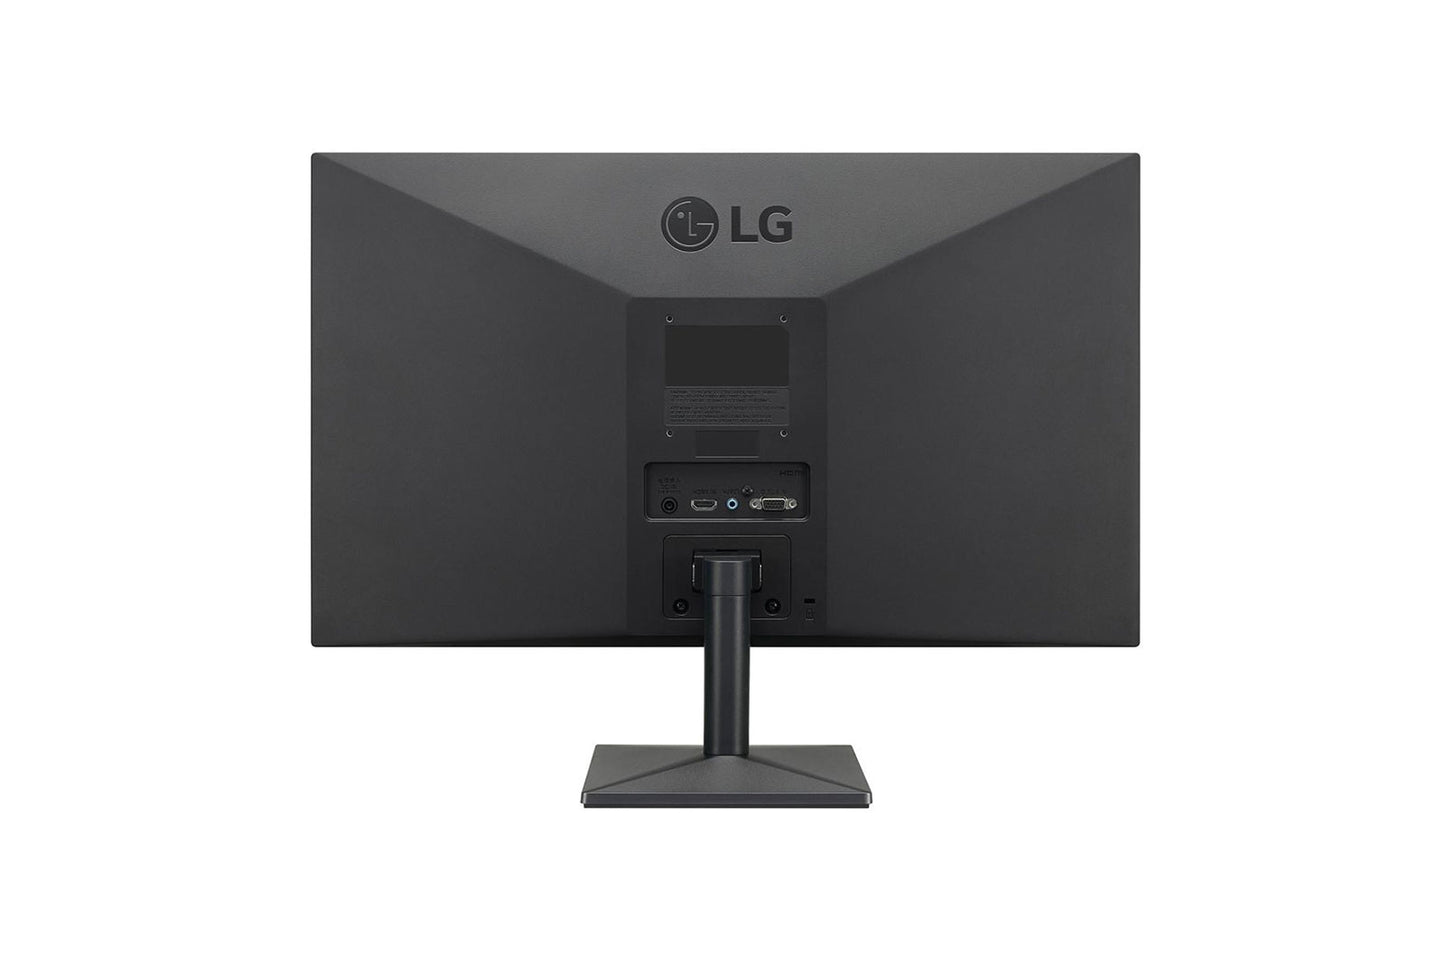 LG 24MK400H-B 24LCD MONITOR FULL HD 1080p VGA/HDMI